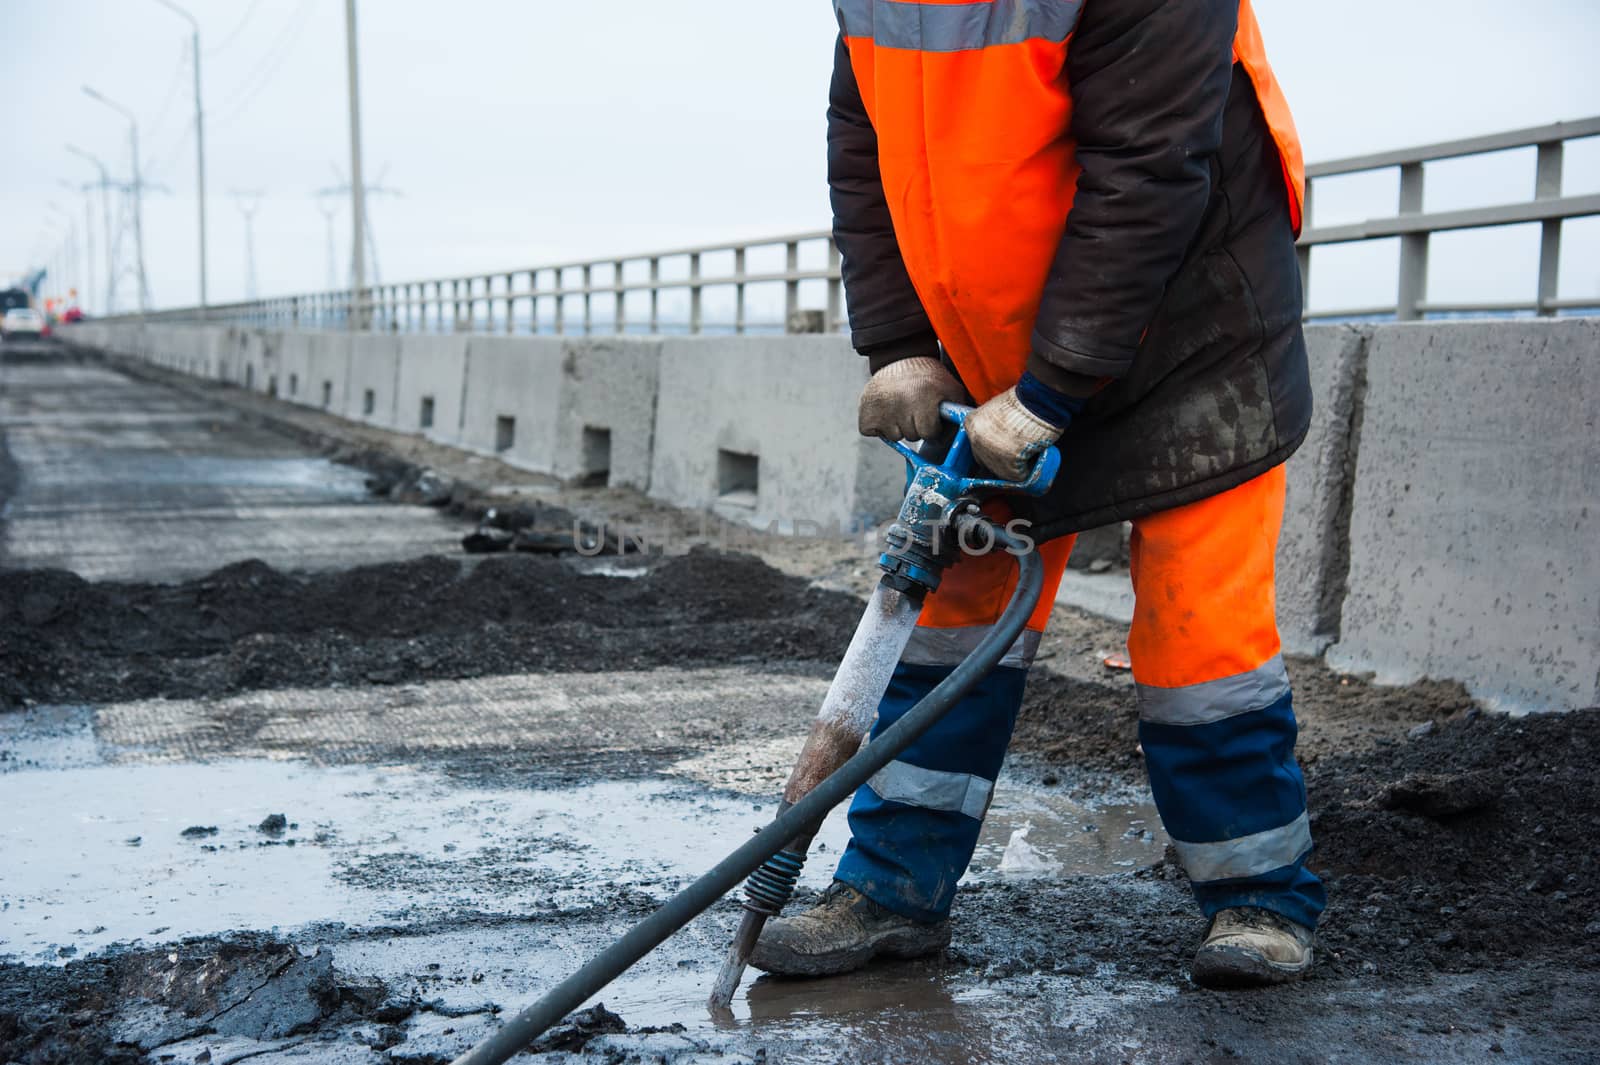 Road worker removes old asphalt with a jackhammer during road construction